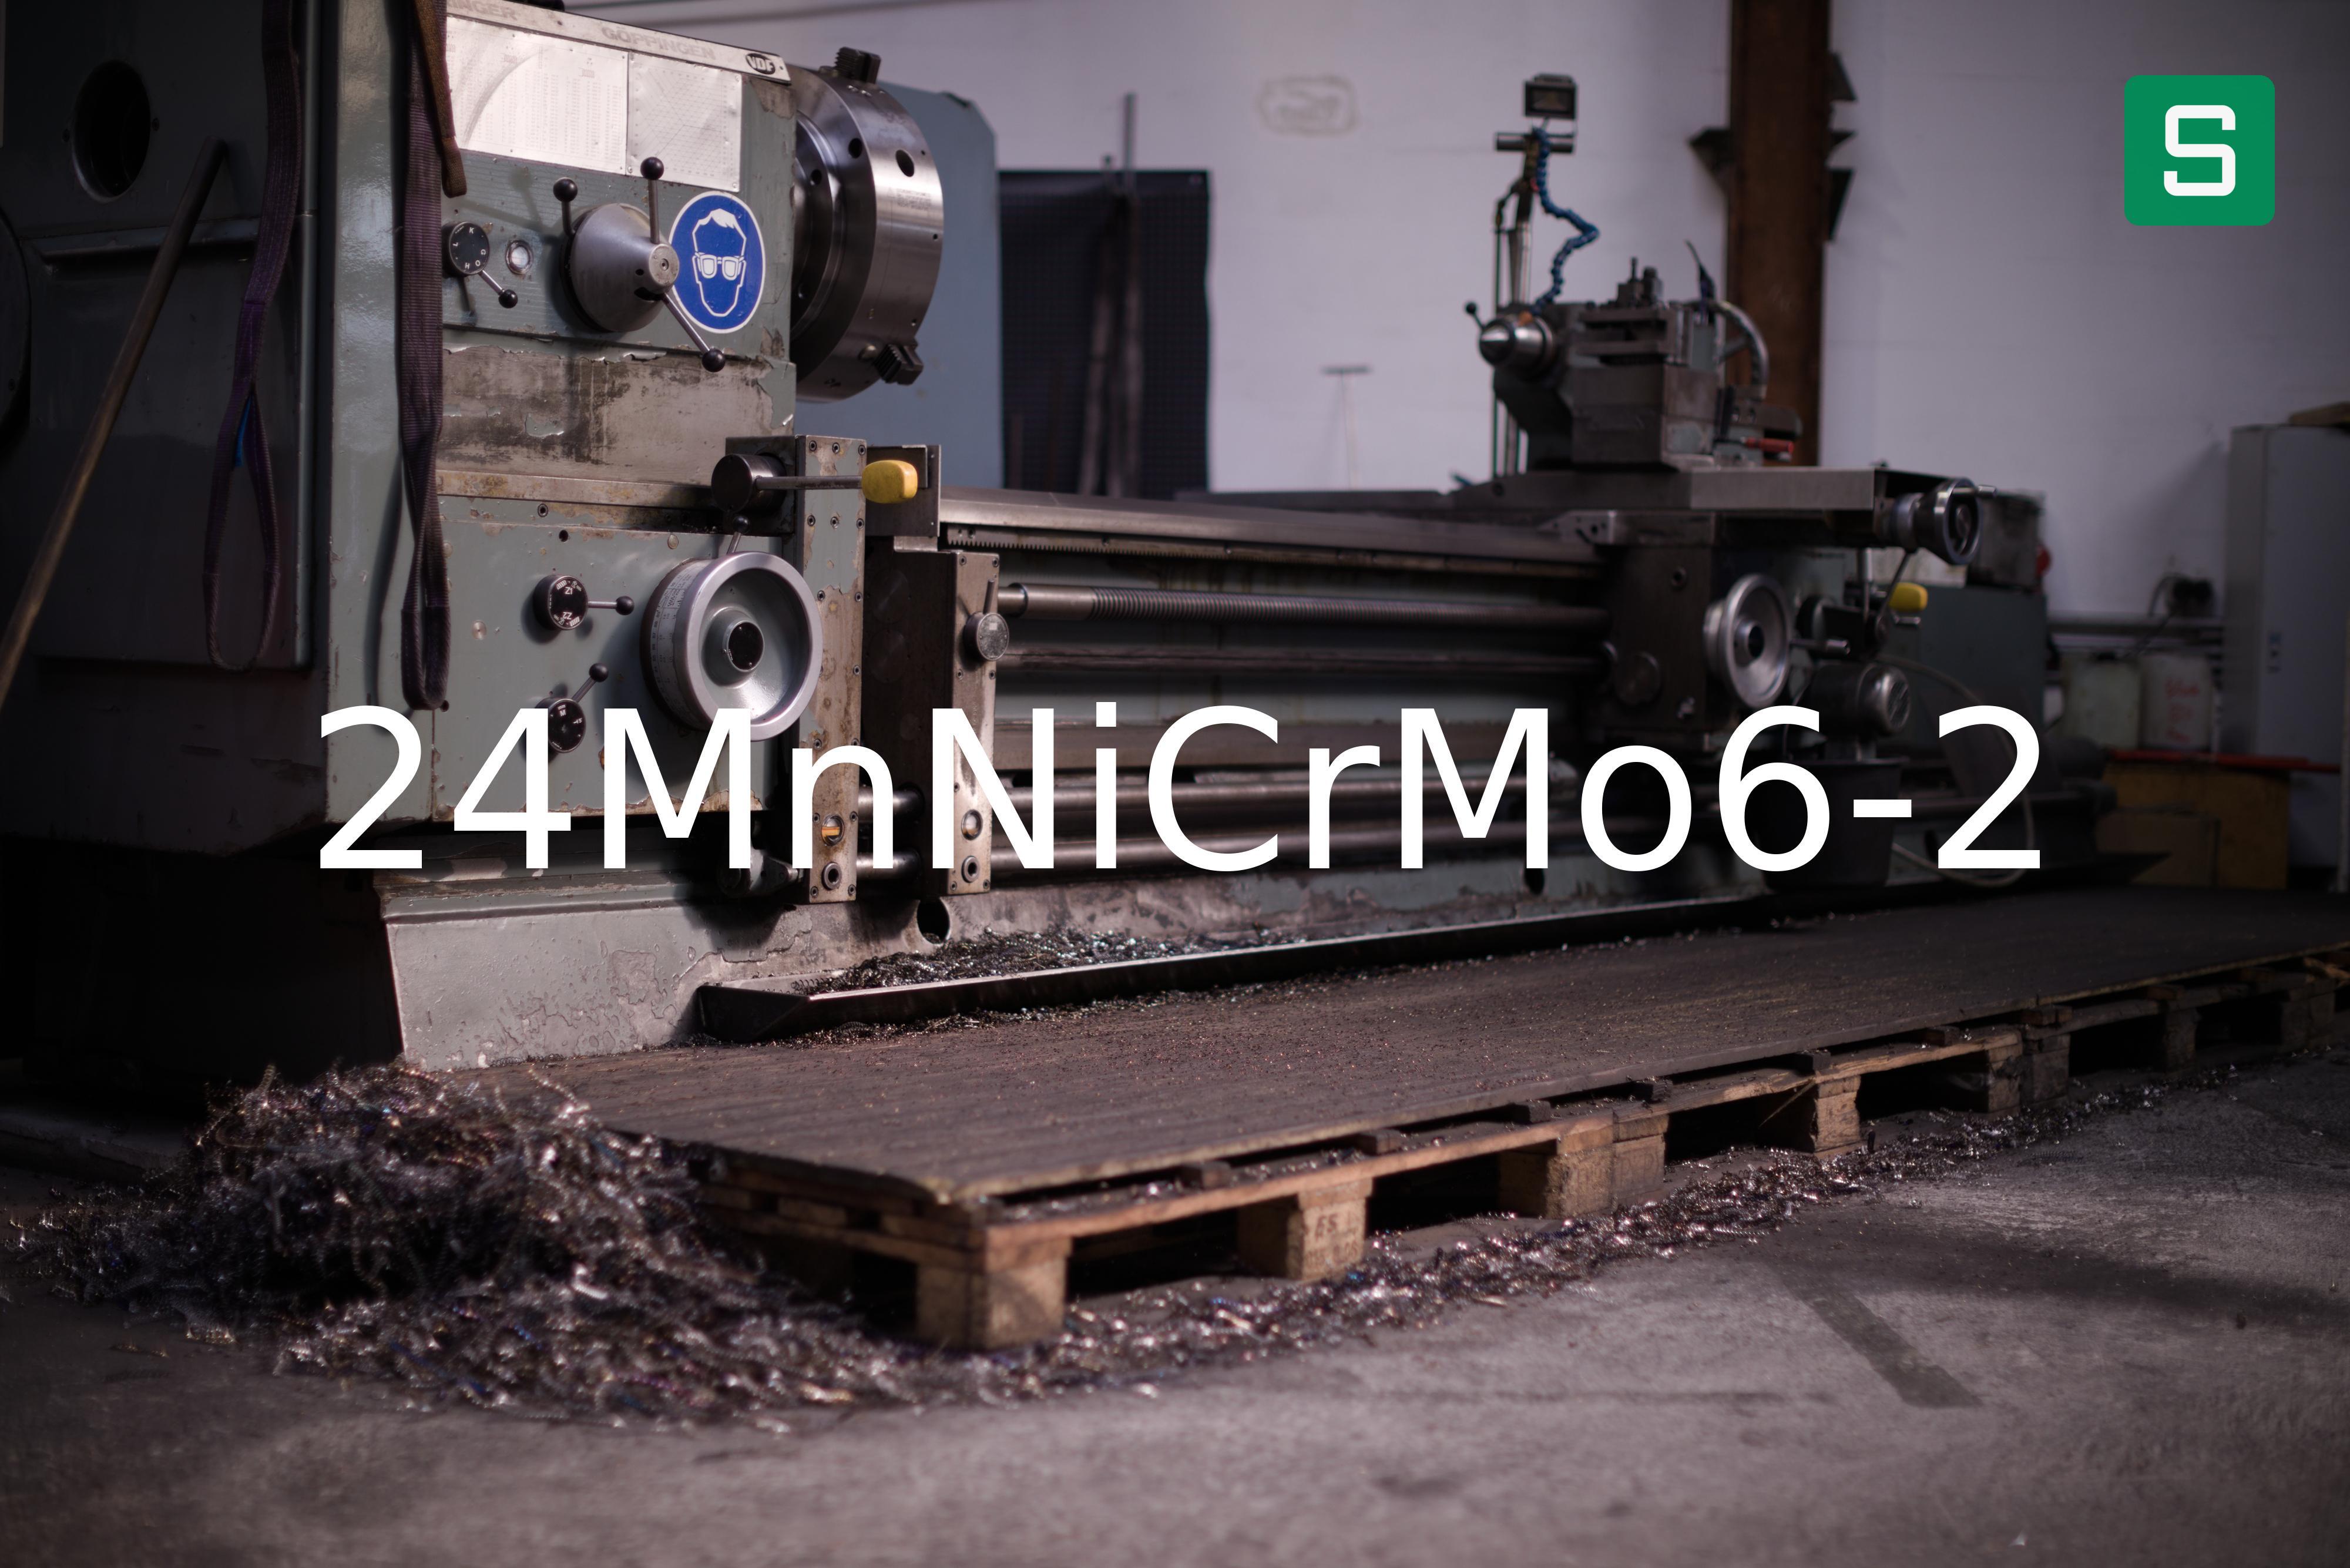 Steel Material: 24MnNiCrMo6-2